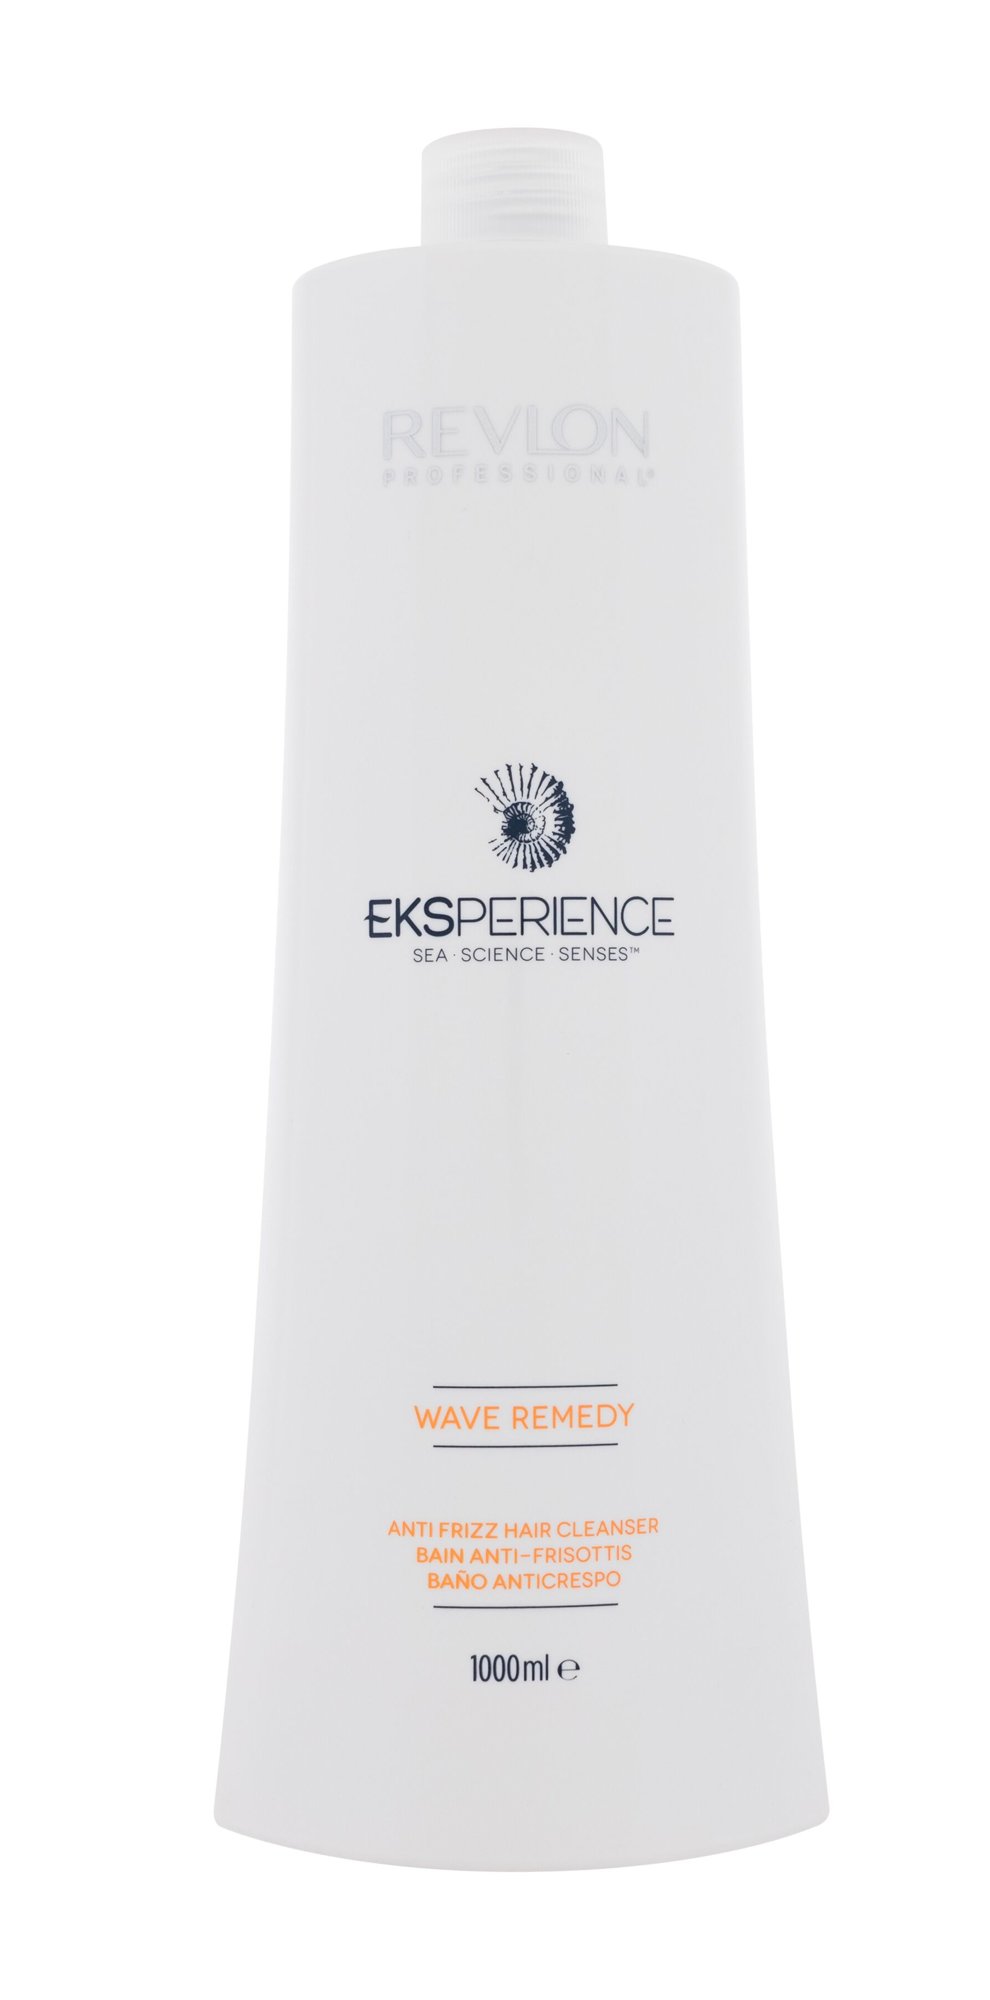 Revlon Professional Eksperience Wave Remedy Anti-Frizz Hair Cleanser šampūnas